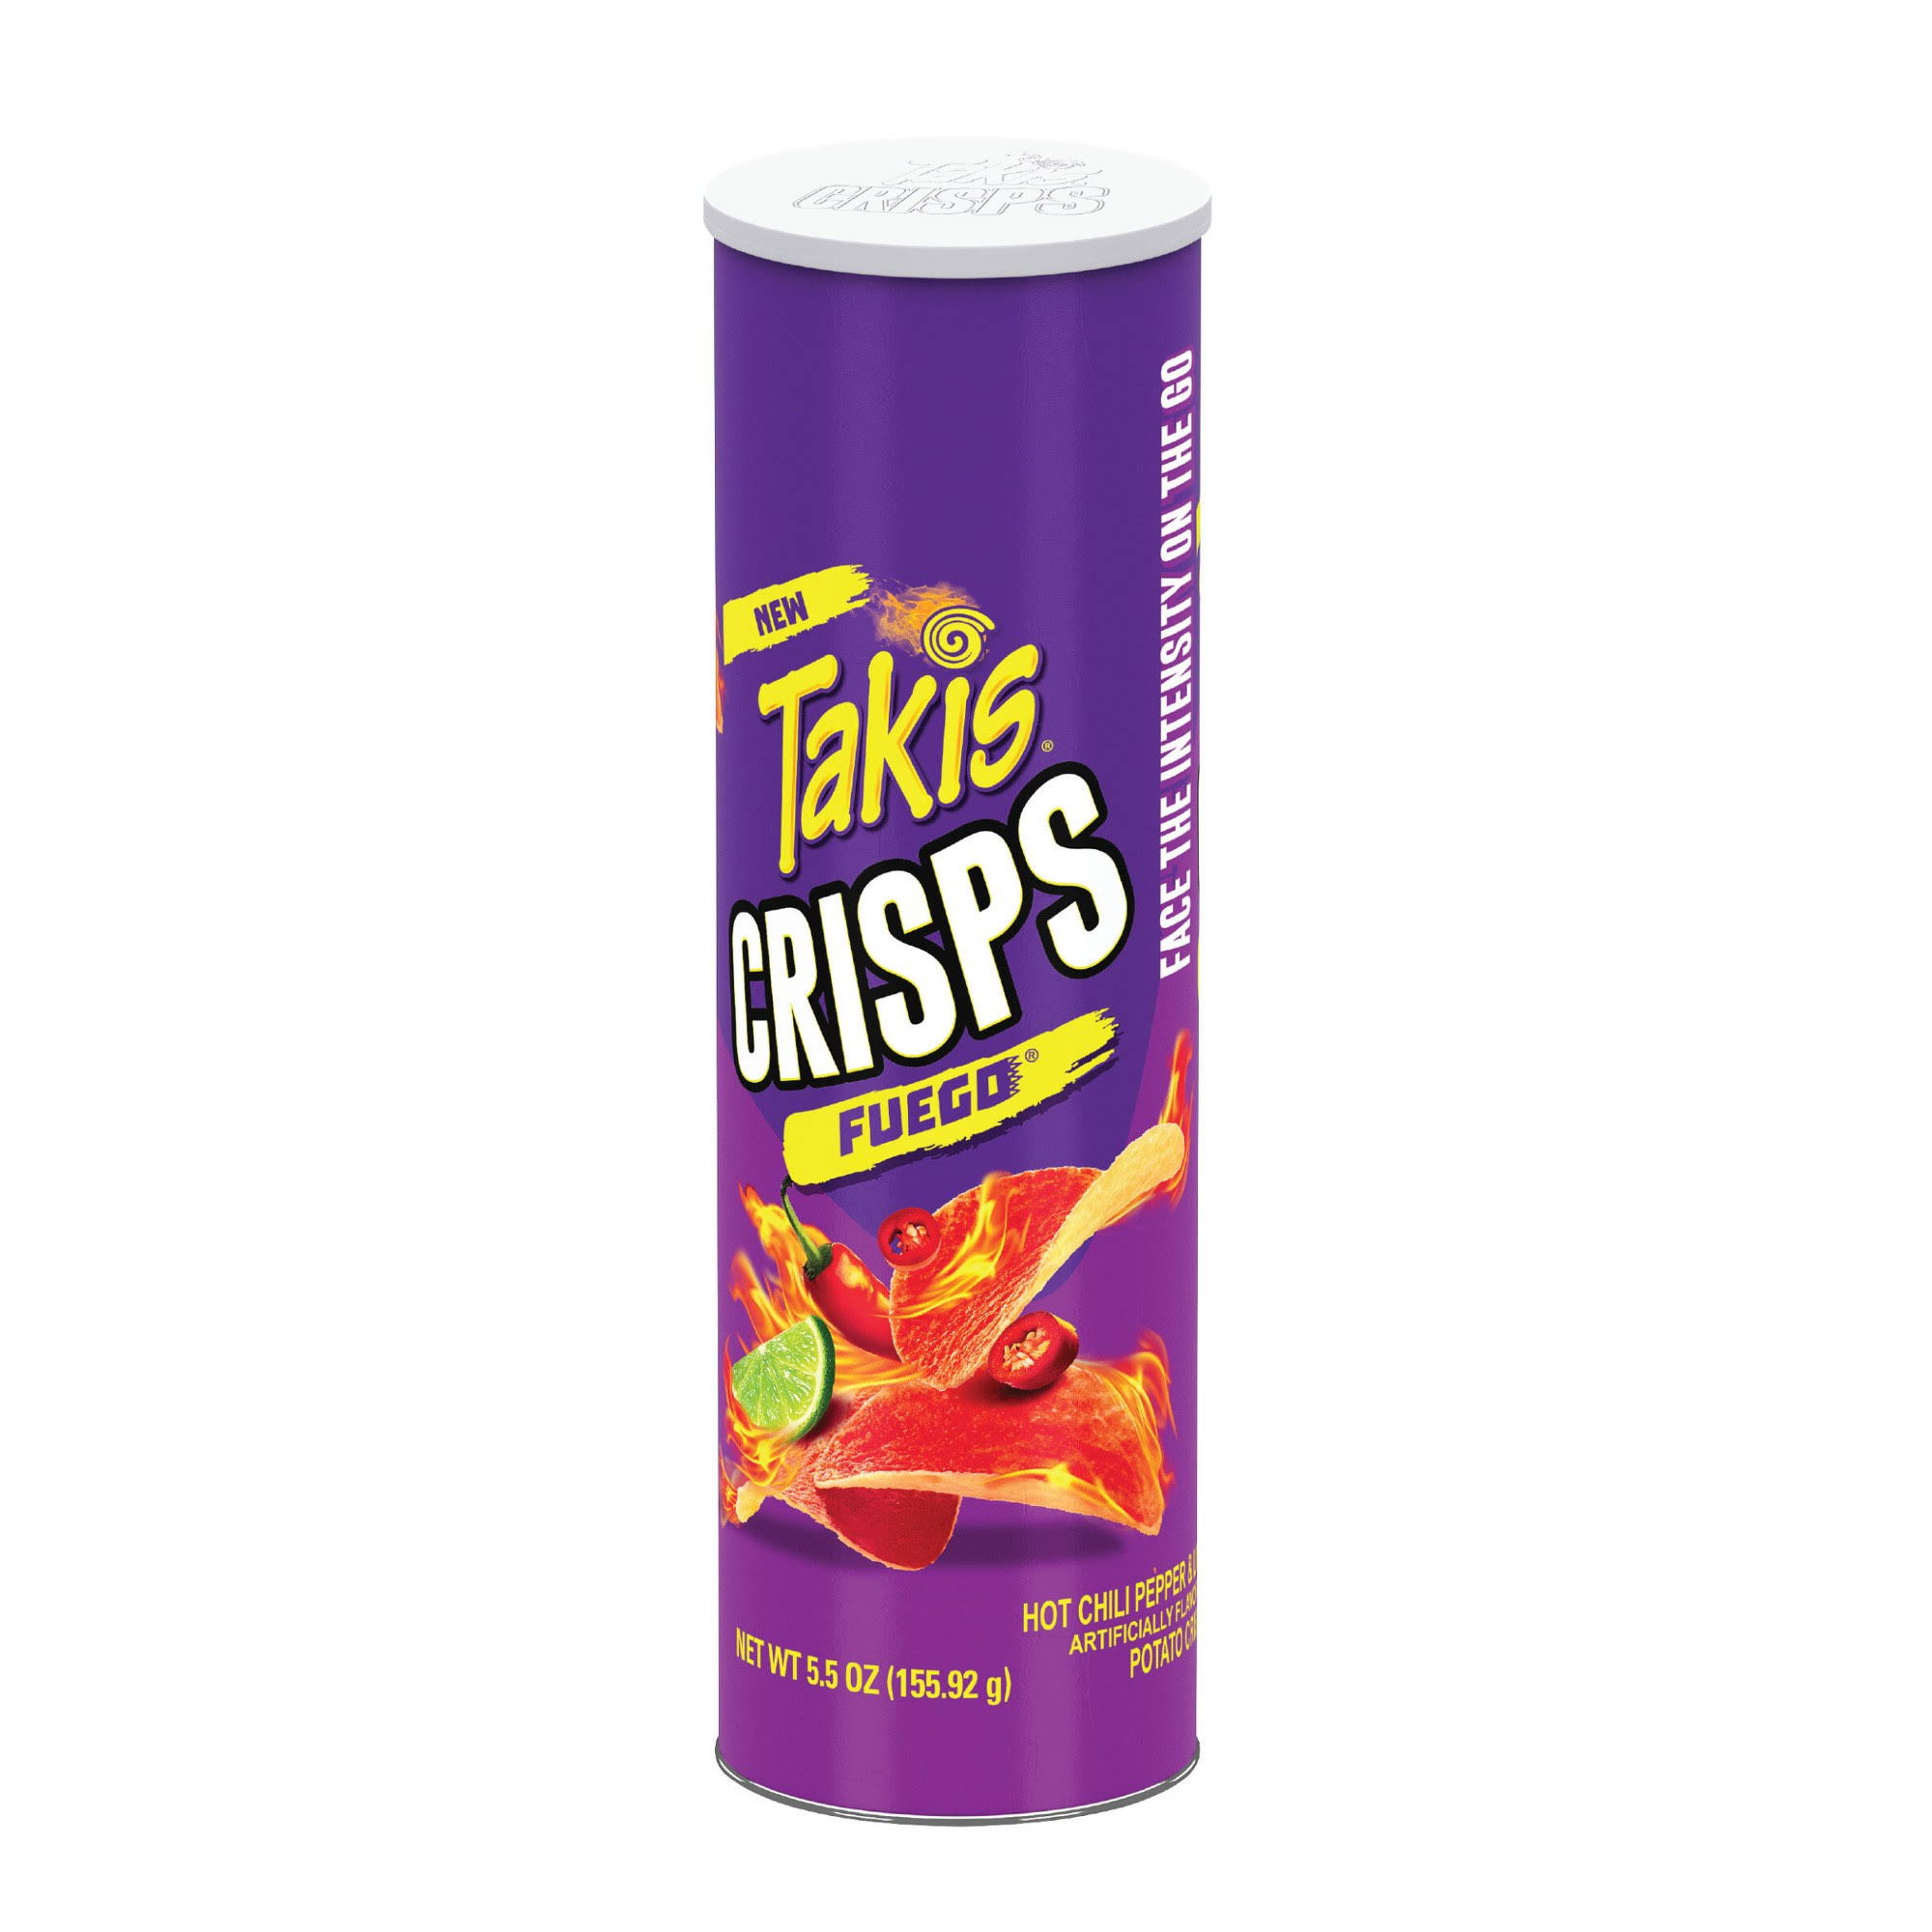 Takis Crisps Fuego Flavor Canister 5.5oz